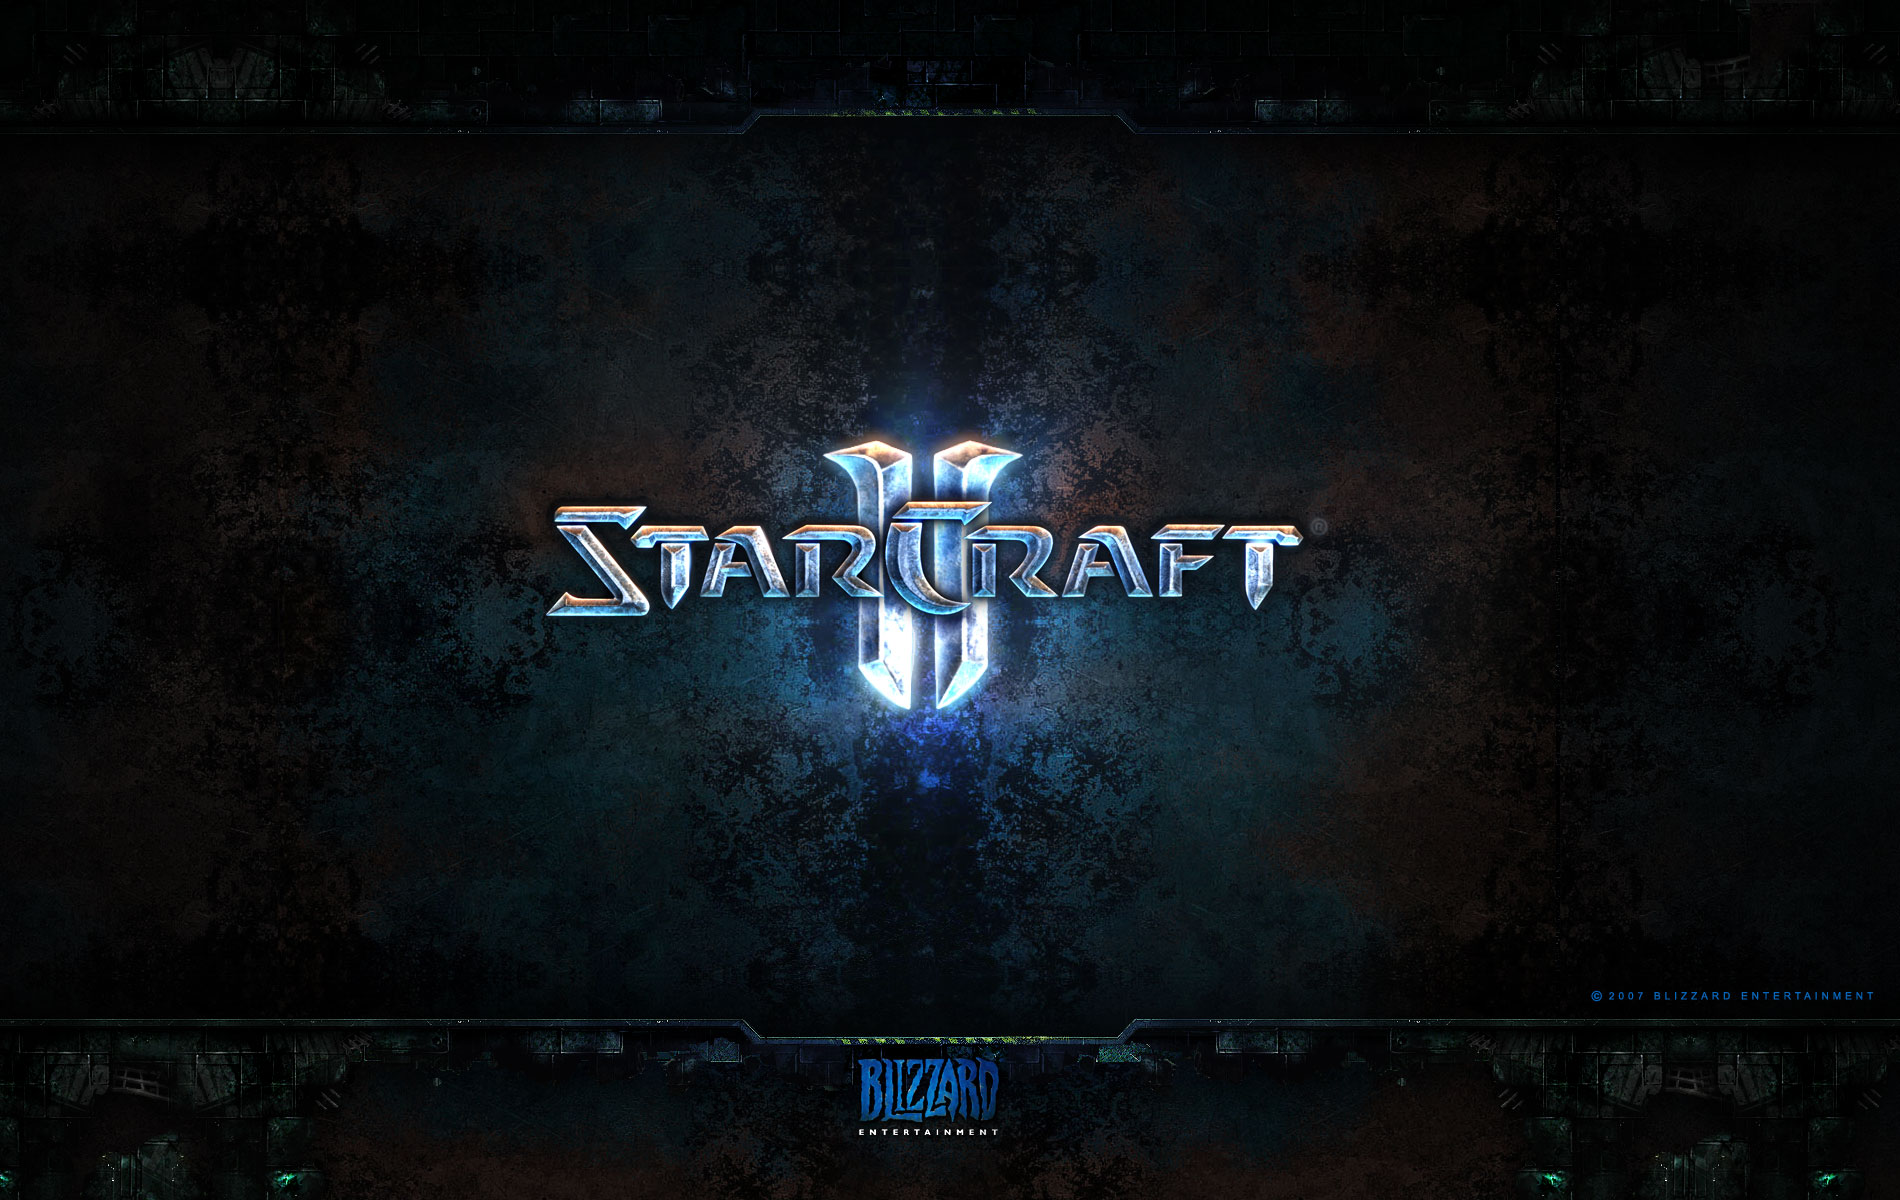 180 Starcraft HD Wallpapers | Backgrounds - Wallpaper Abyss